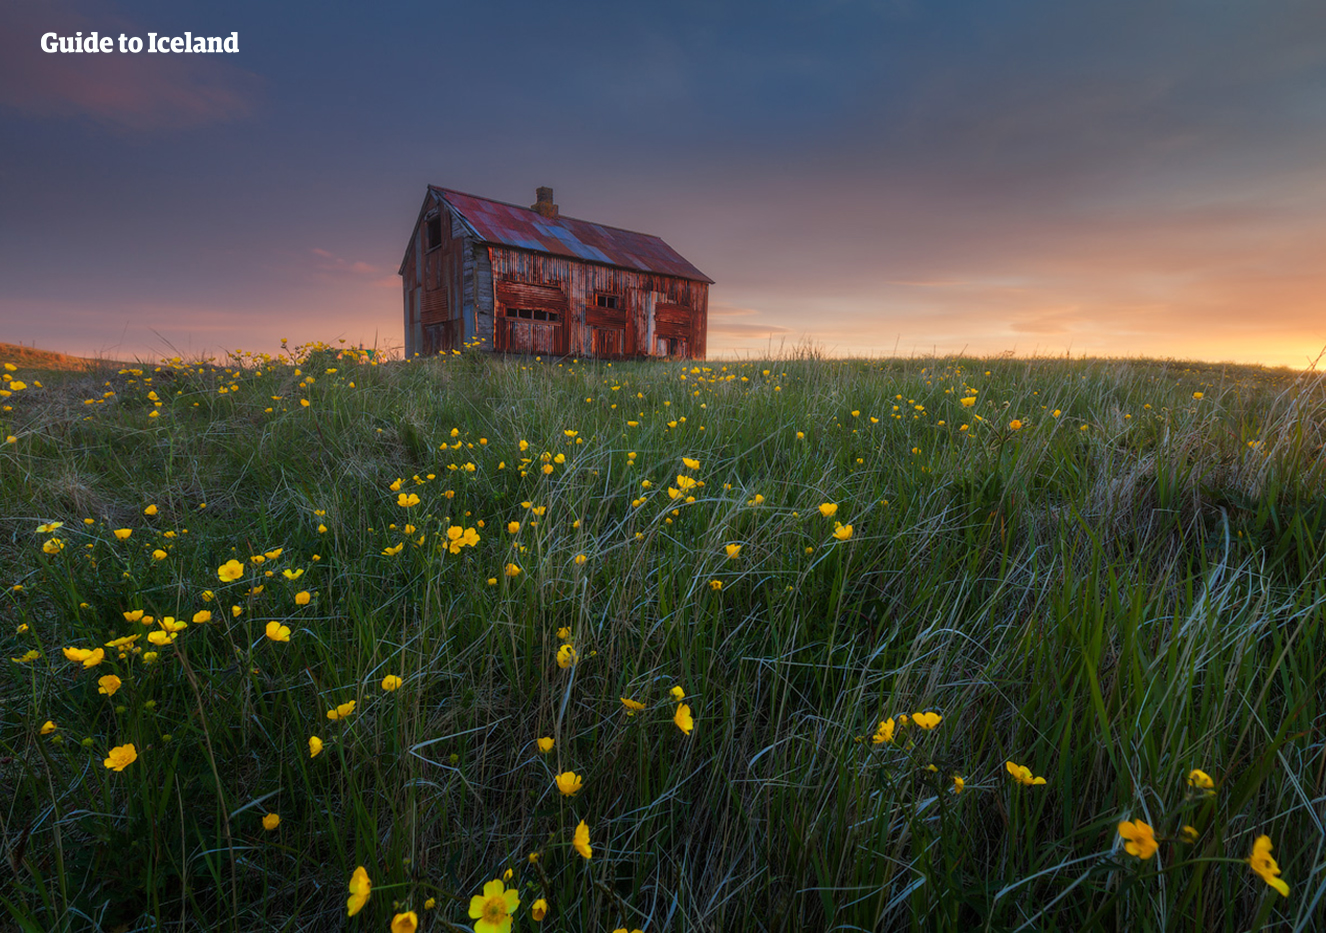 An abandoned farm house on the Reykjanes Peninsula